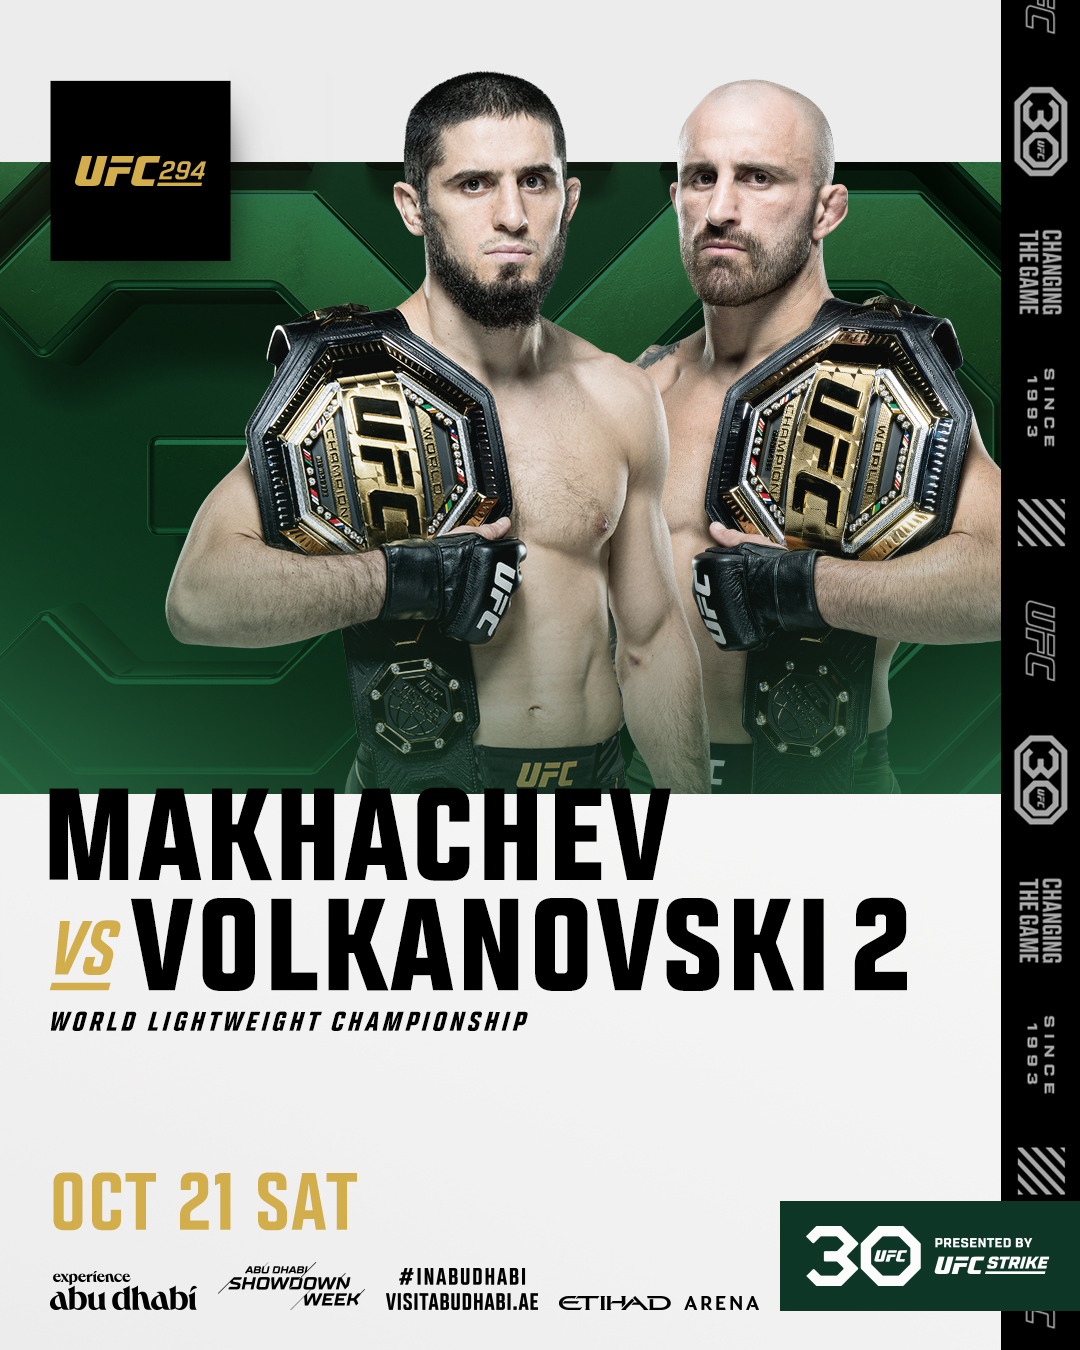 UFC 294: Islam Makhachev nocauteia Alexander Volkanovski de forma